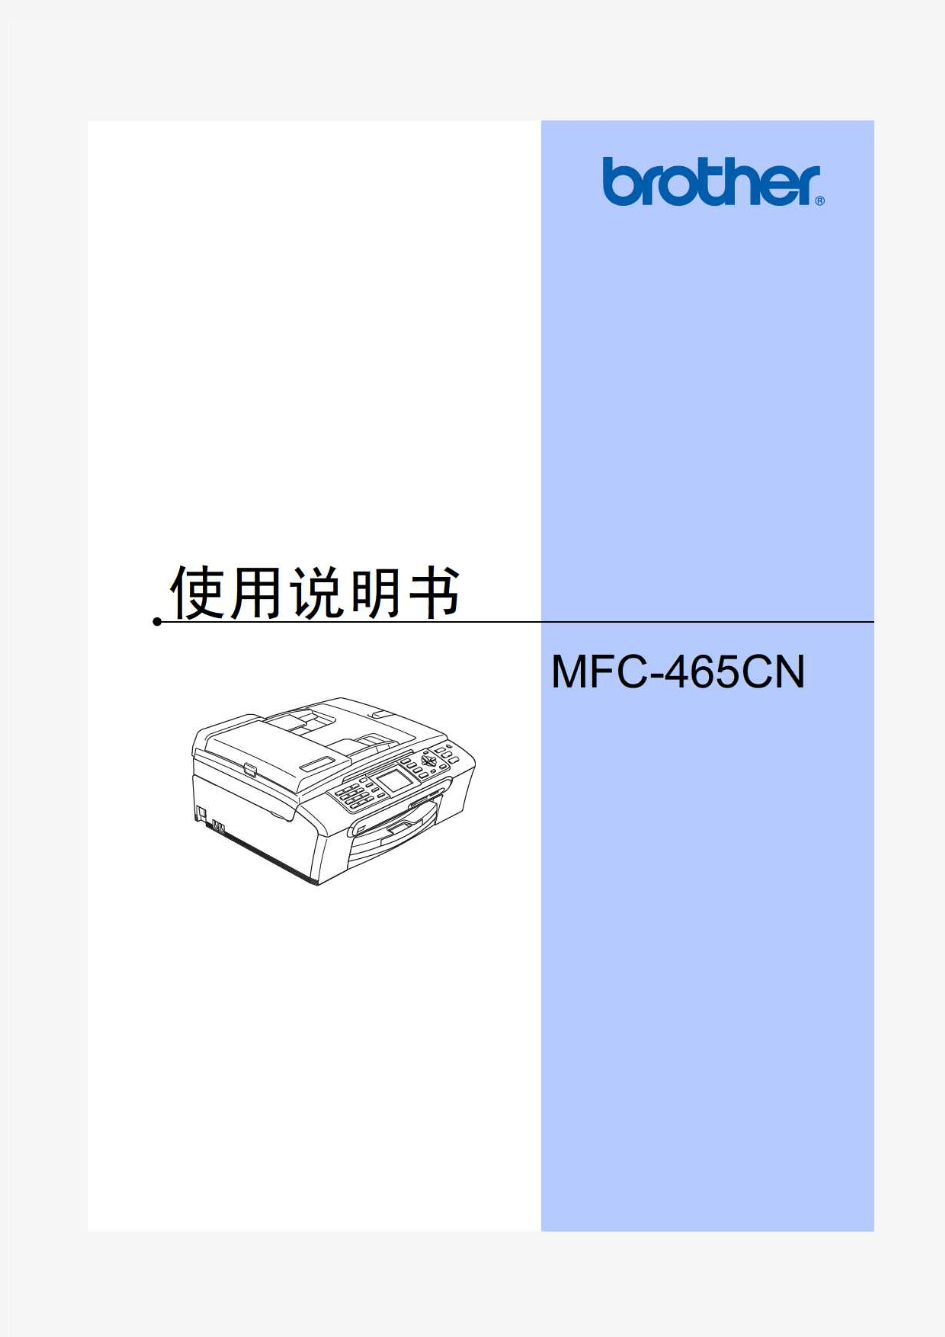 brotherMFC-465CN使用说明书